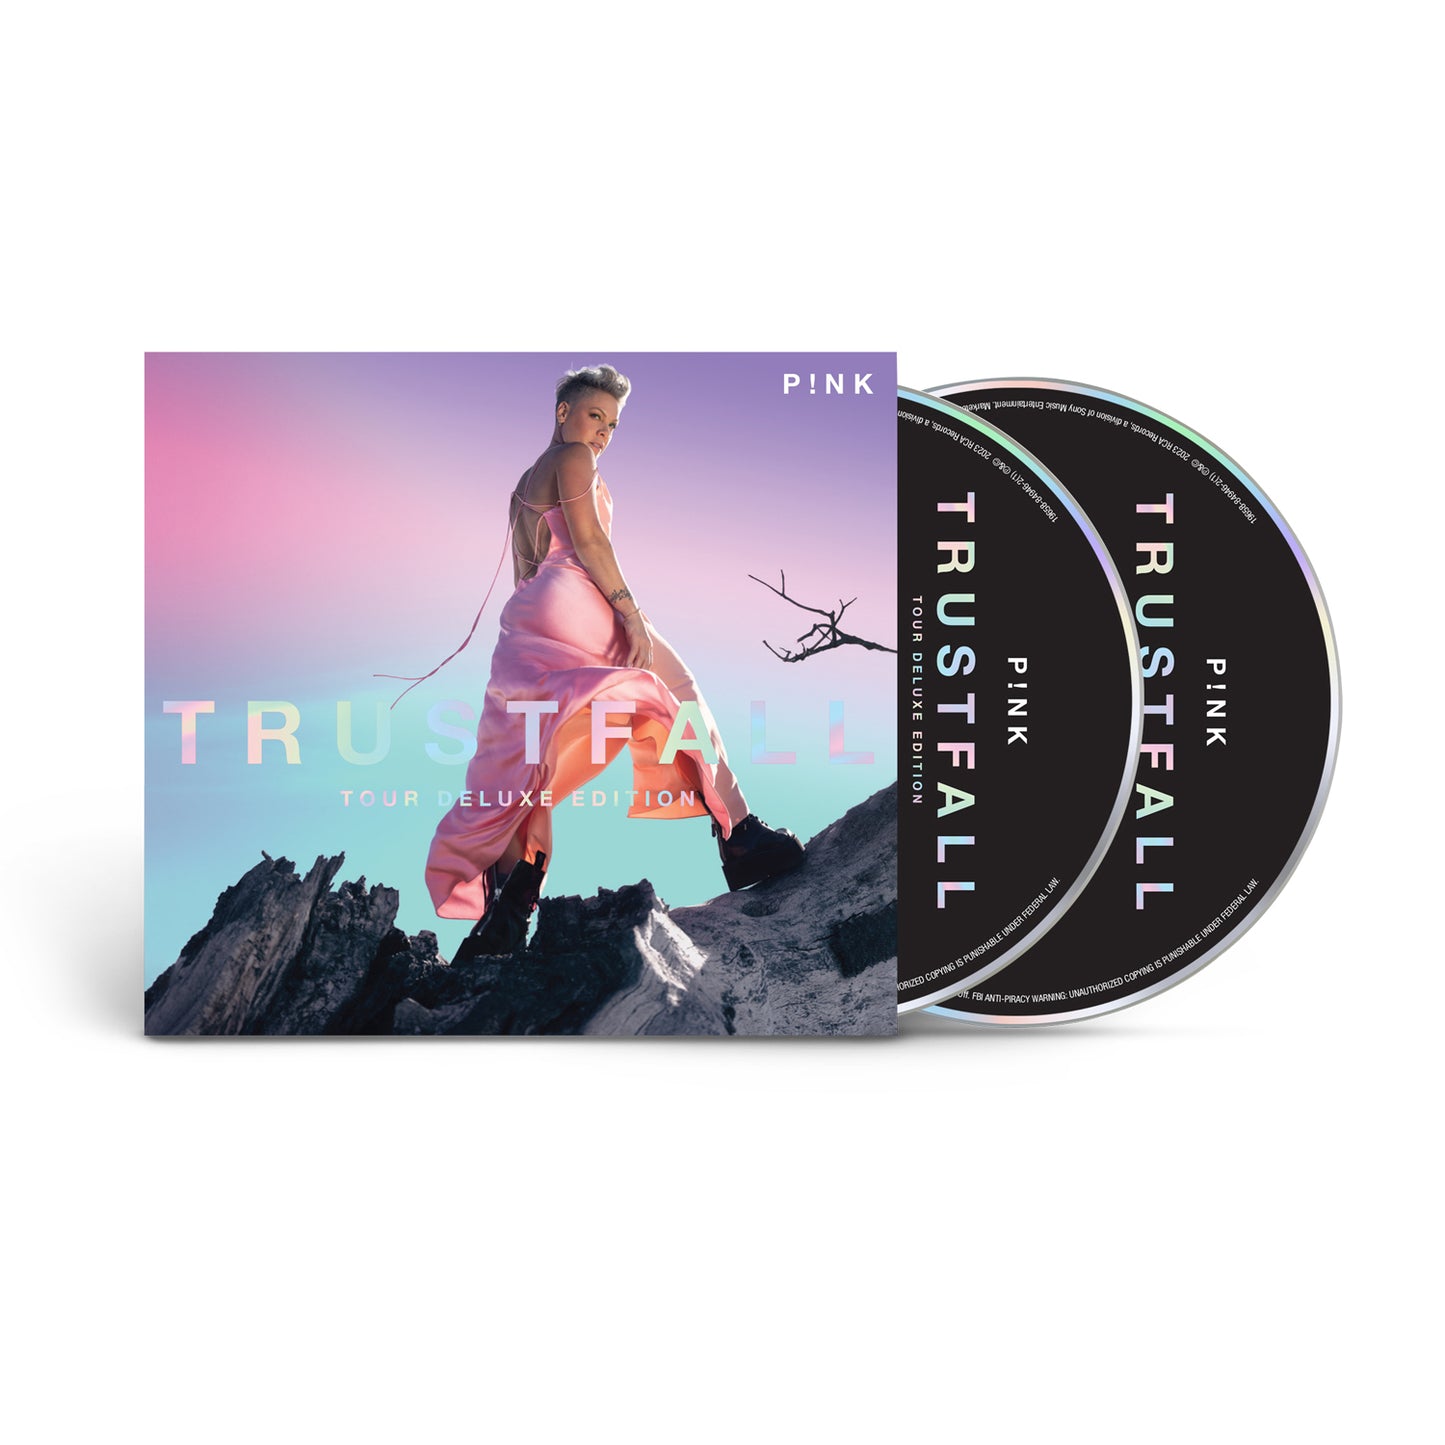 Trustfall Tour Deluxe Edition 2CD